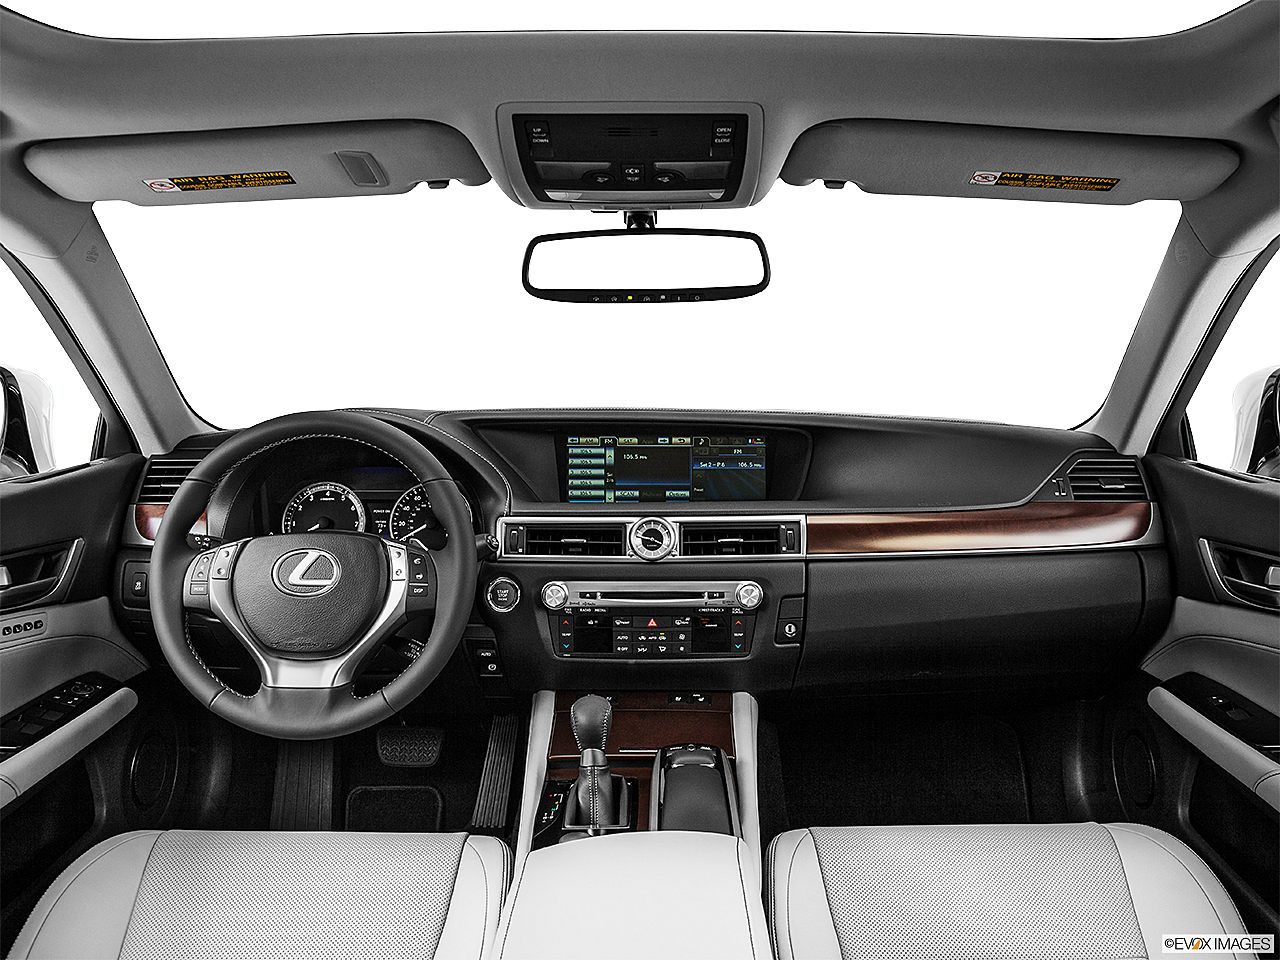 2014 Lexus GS 350 4dr Sedan - Research - GrooveCar